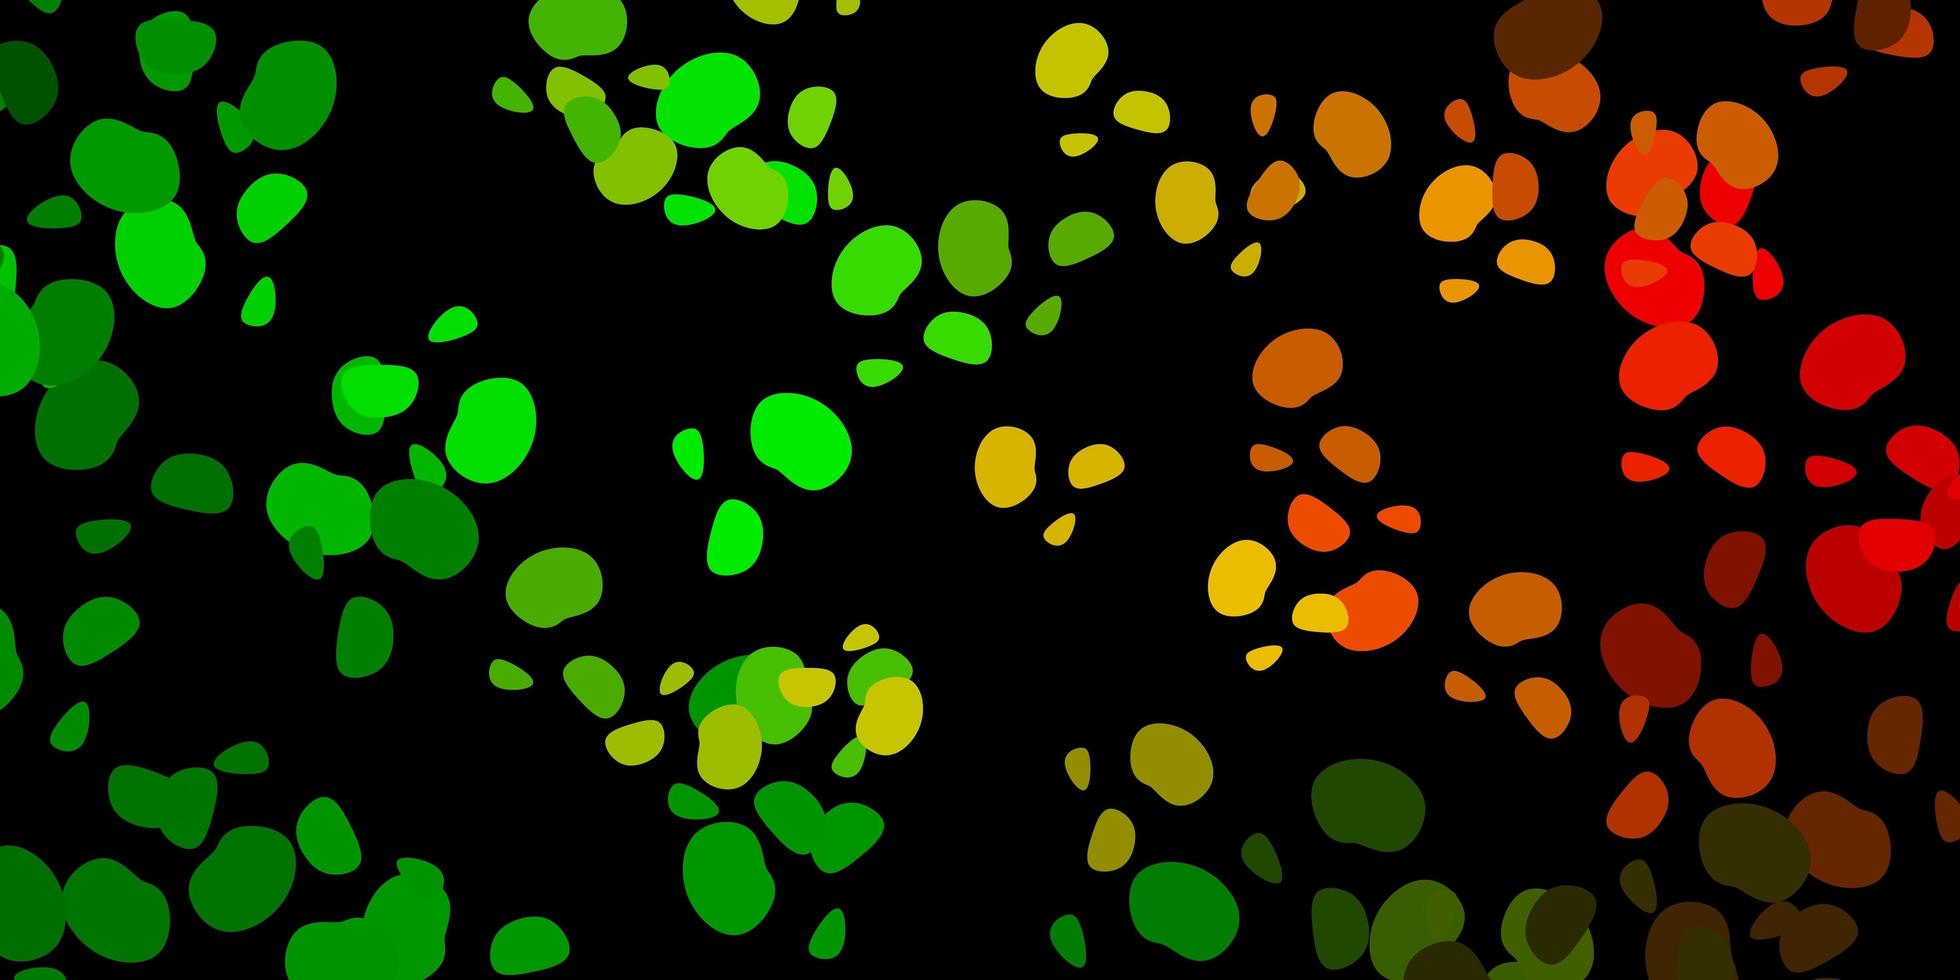 modelo de vetor verde escuro e amarelo com formas abstratas.